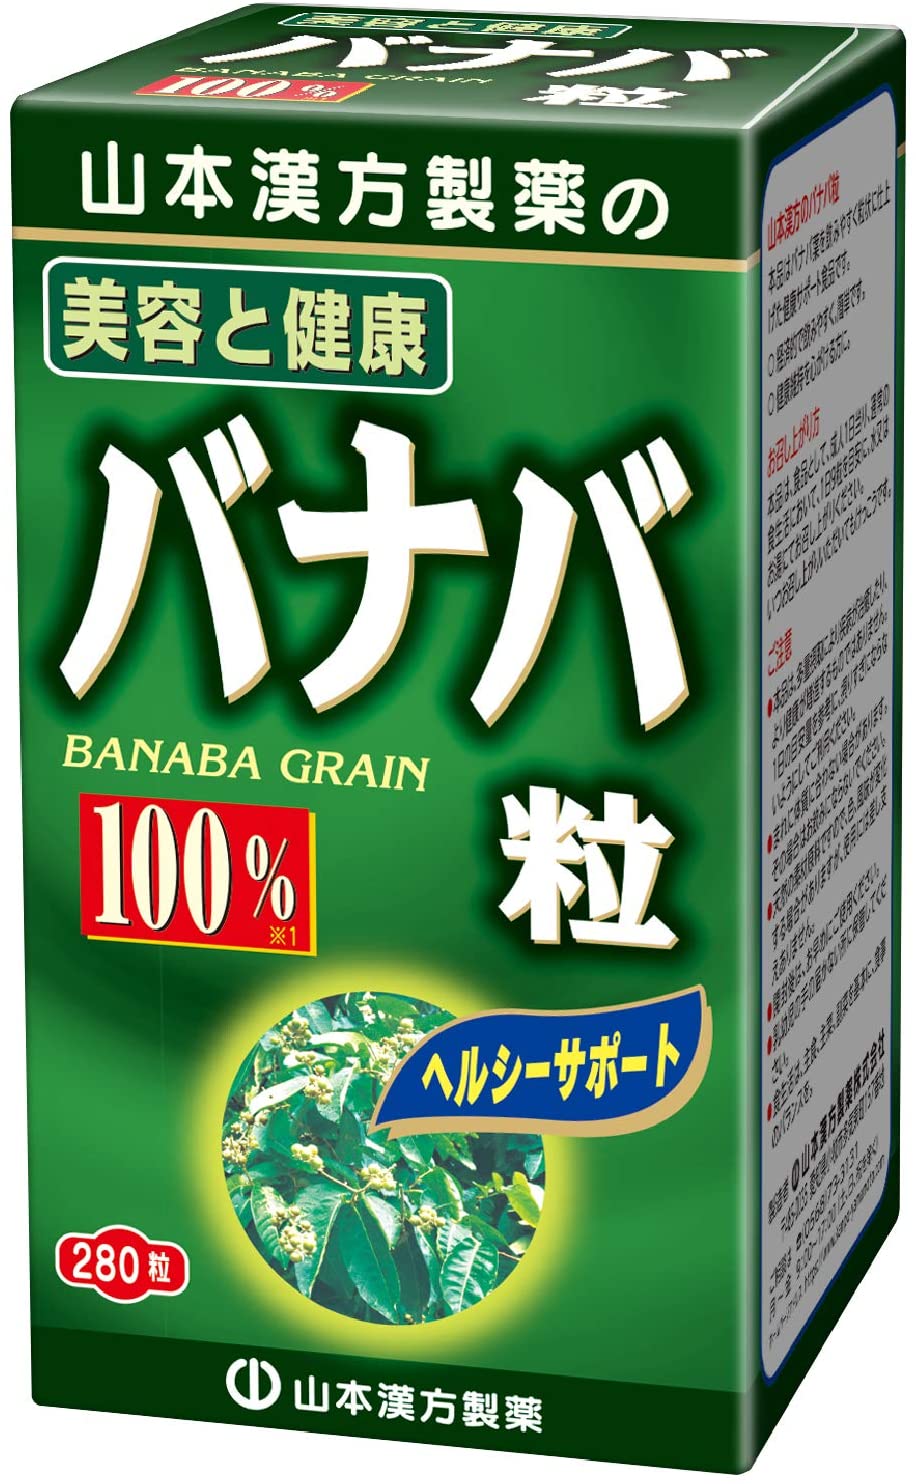 Банаба для контроля уровня сахара в крови Banaba Grain 100% Yamamoto Kampo, 280 шт